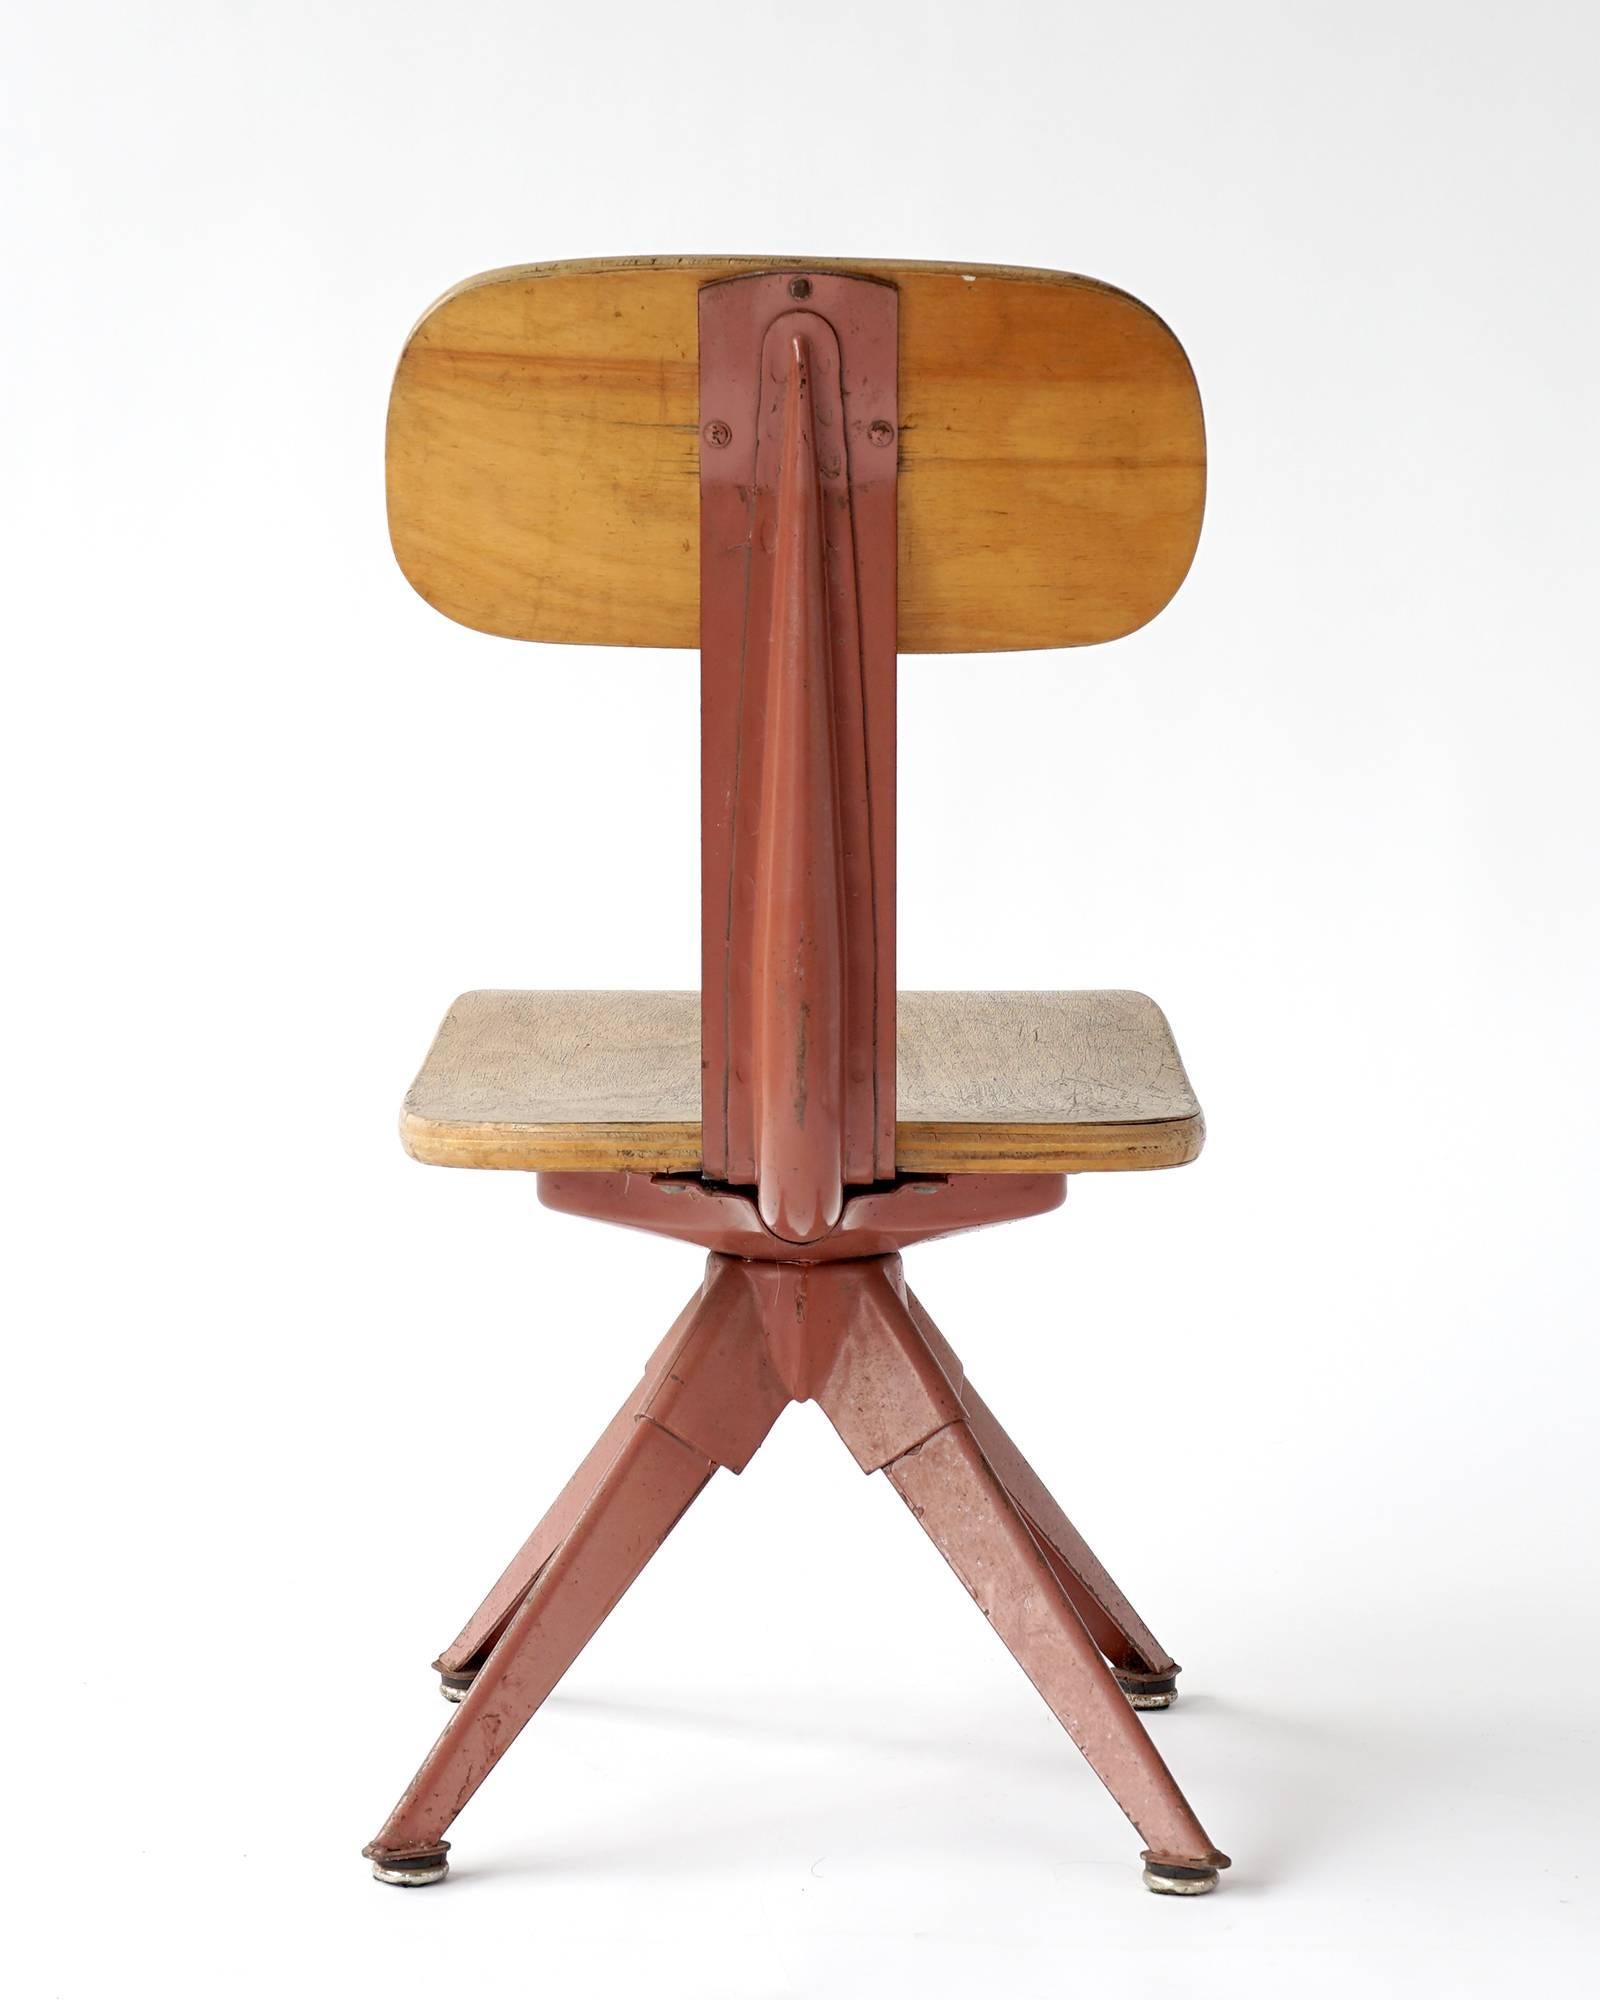 American Odelberg Olsen Influenced Child's Chair